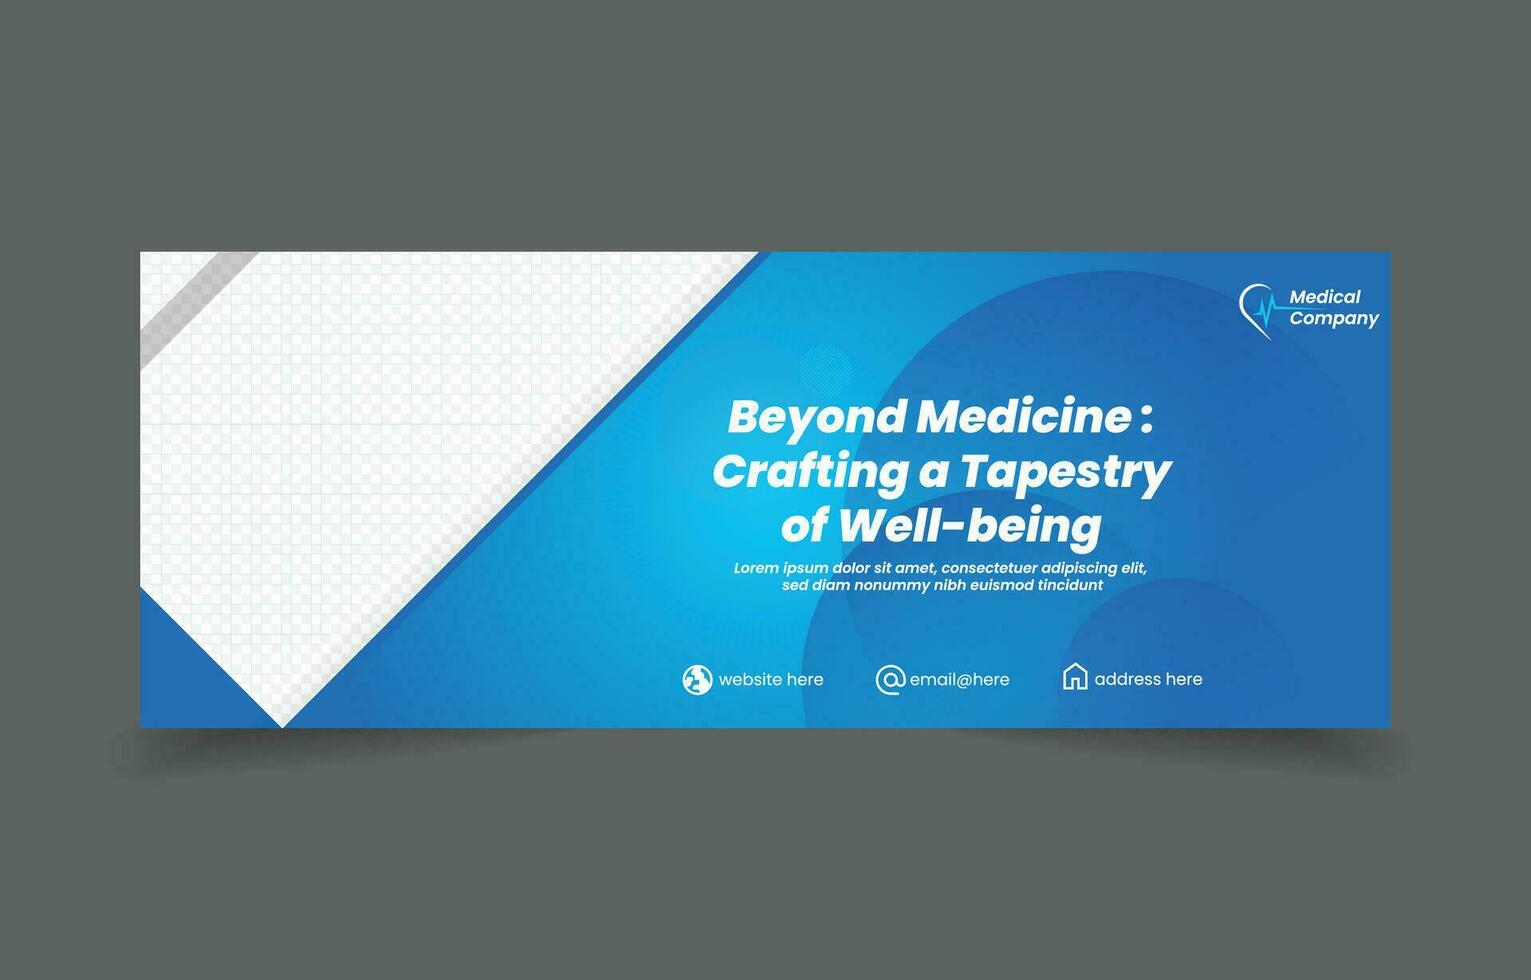 medical banner social media cover design abstract background blue color vector